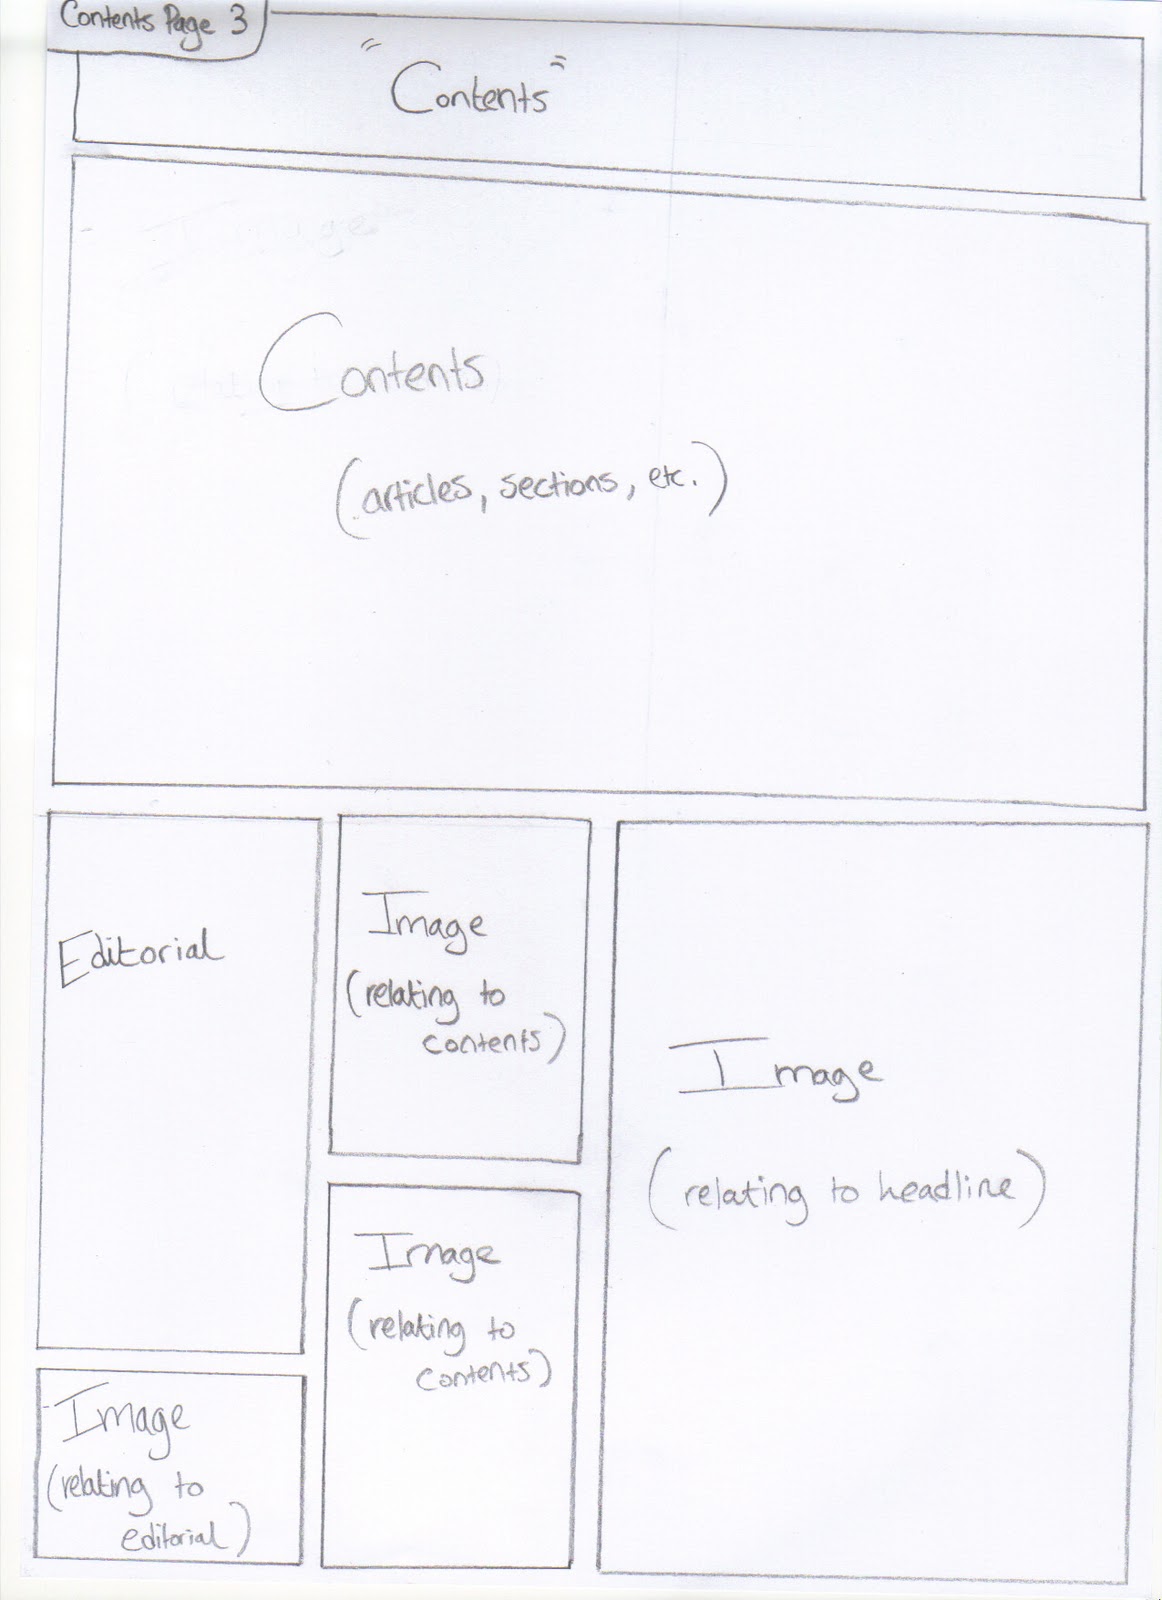 J Carolan's Media Blog: Layout Designs - Contents Page